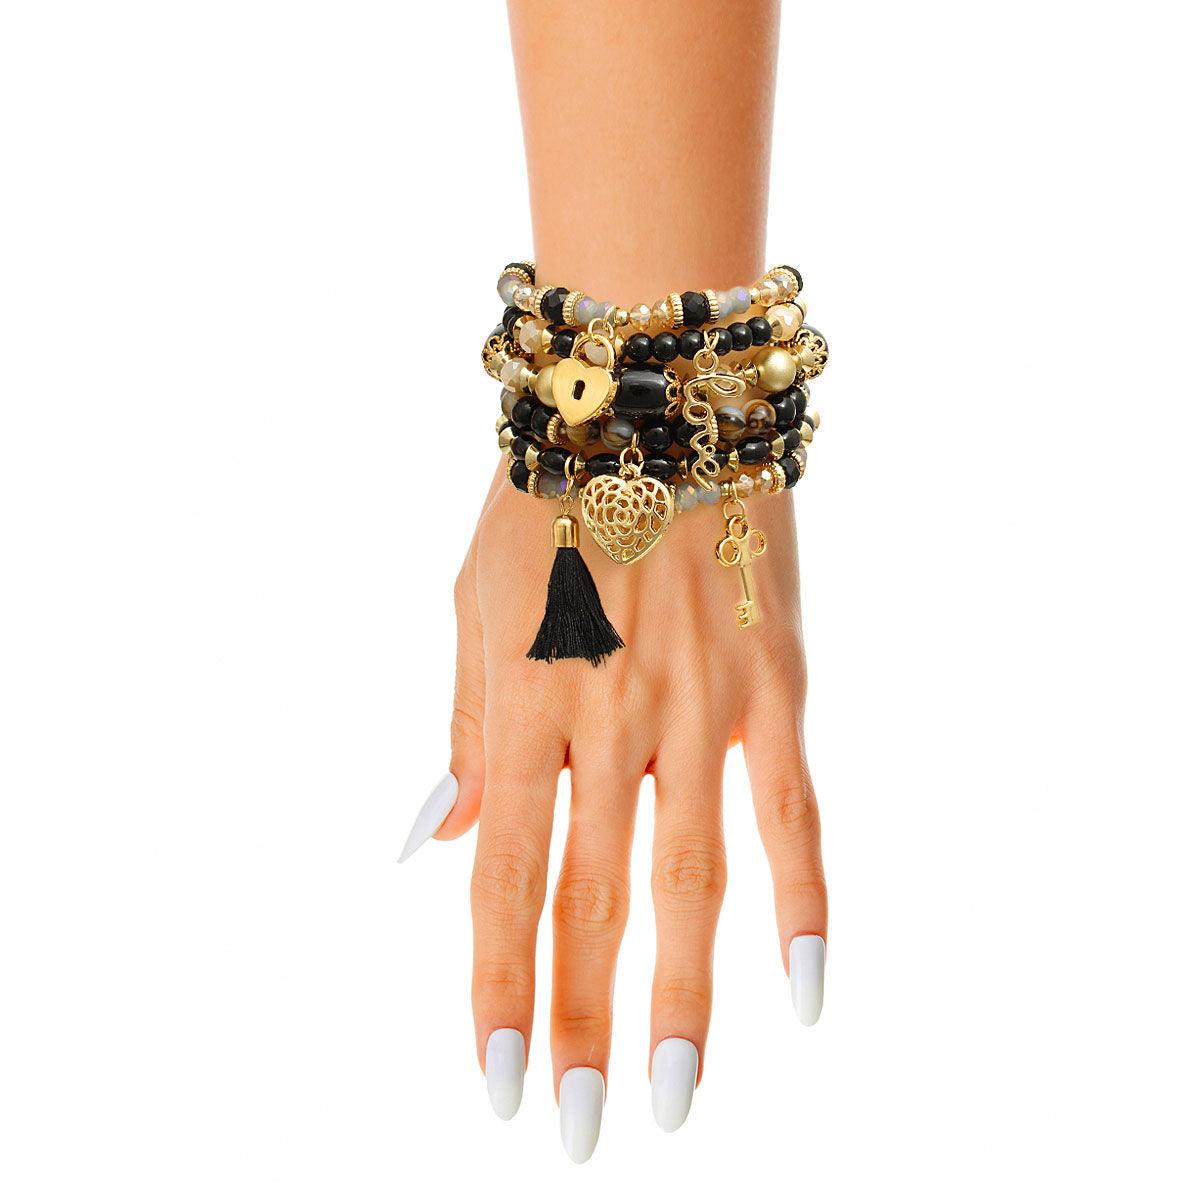 Get Your Wrist Game On: Black Bead Charm Bracelets That Rock